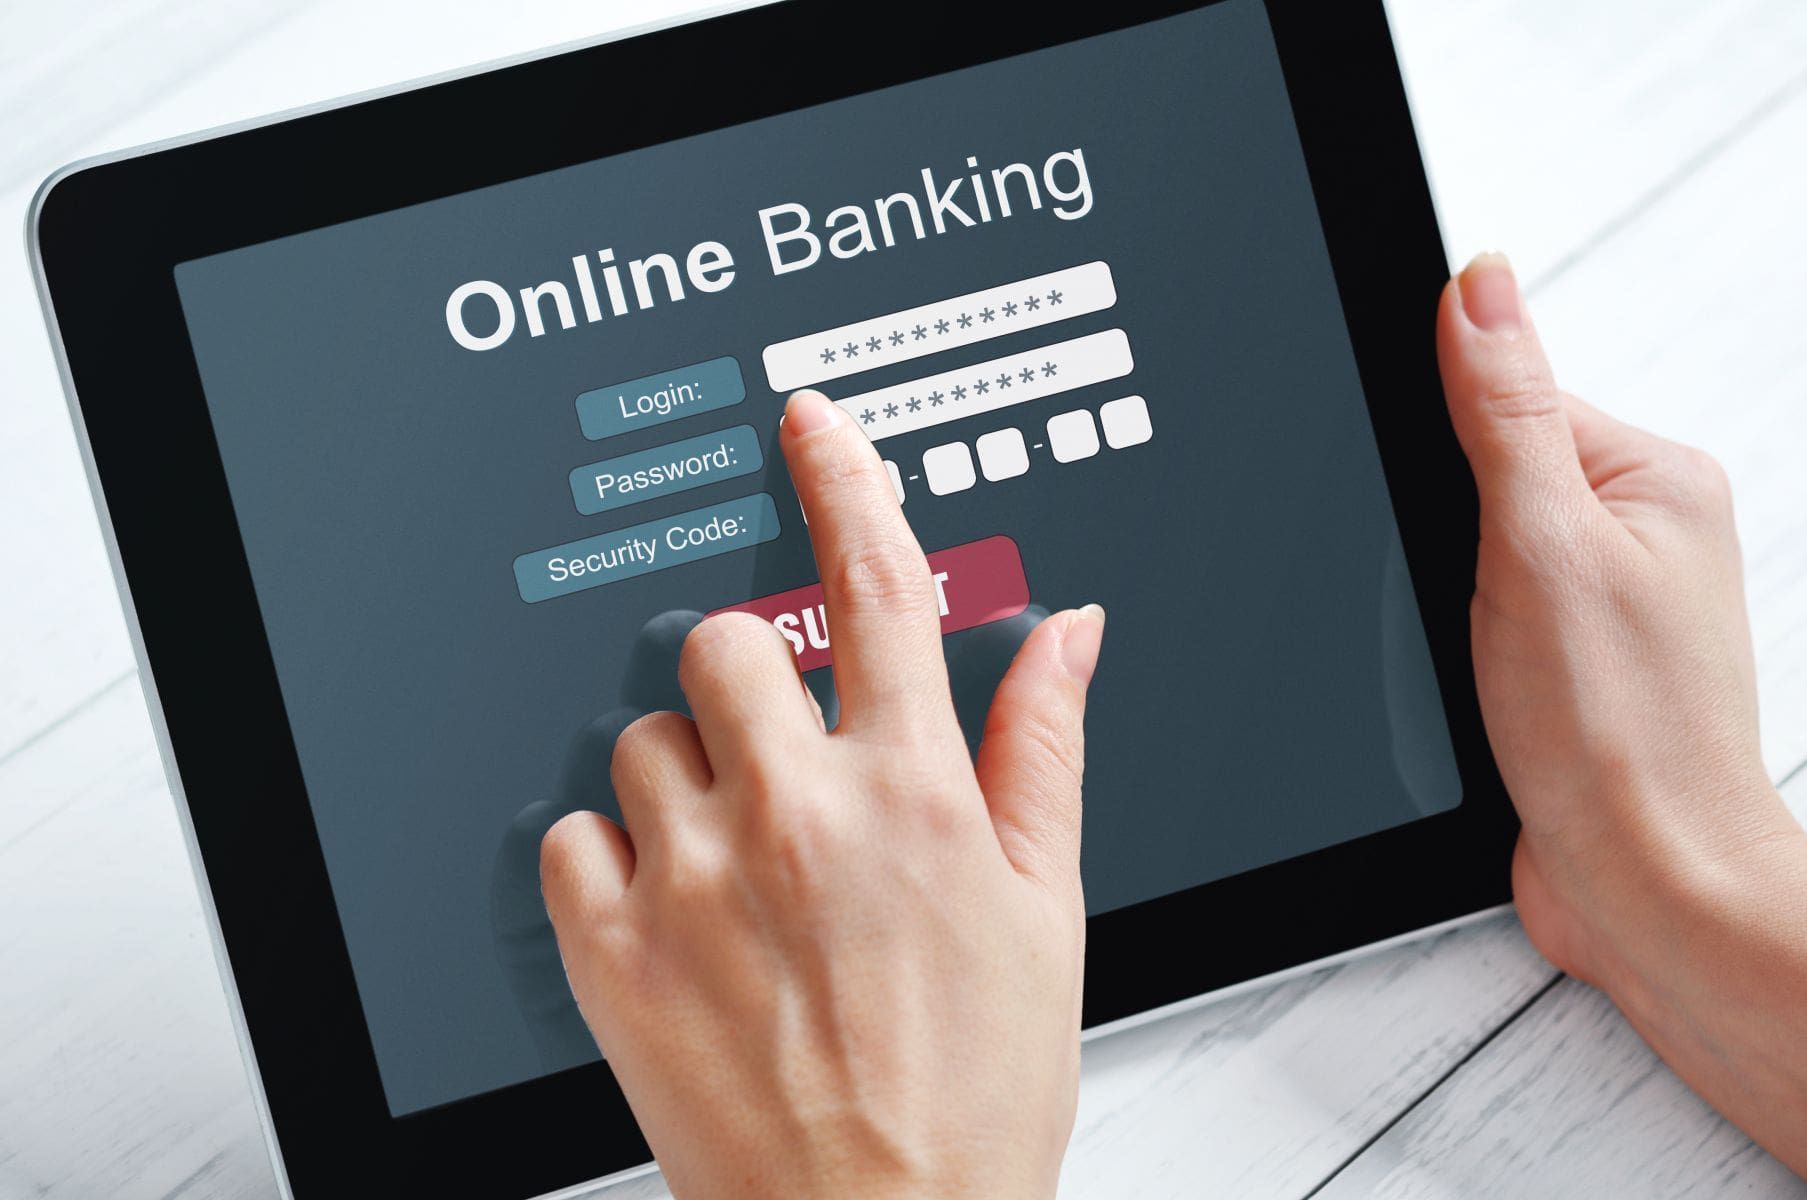 Банковские отделения уходят в онлайн